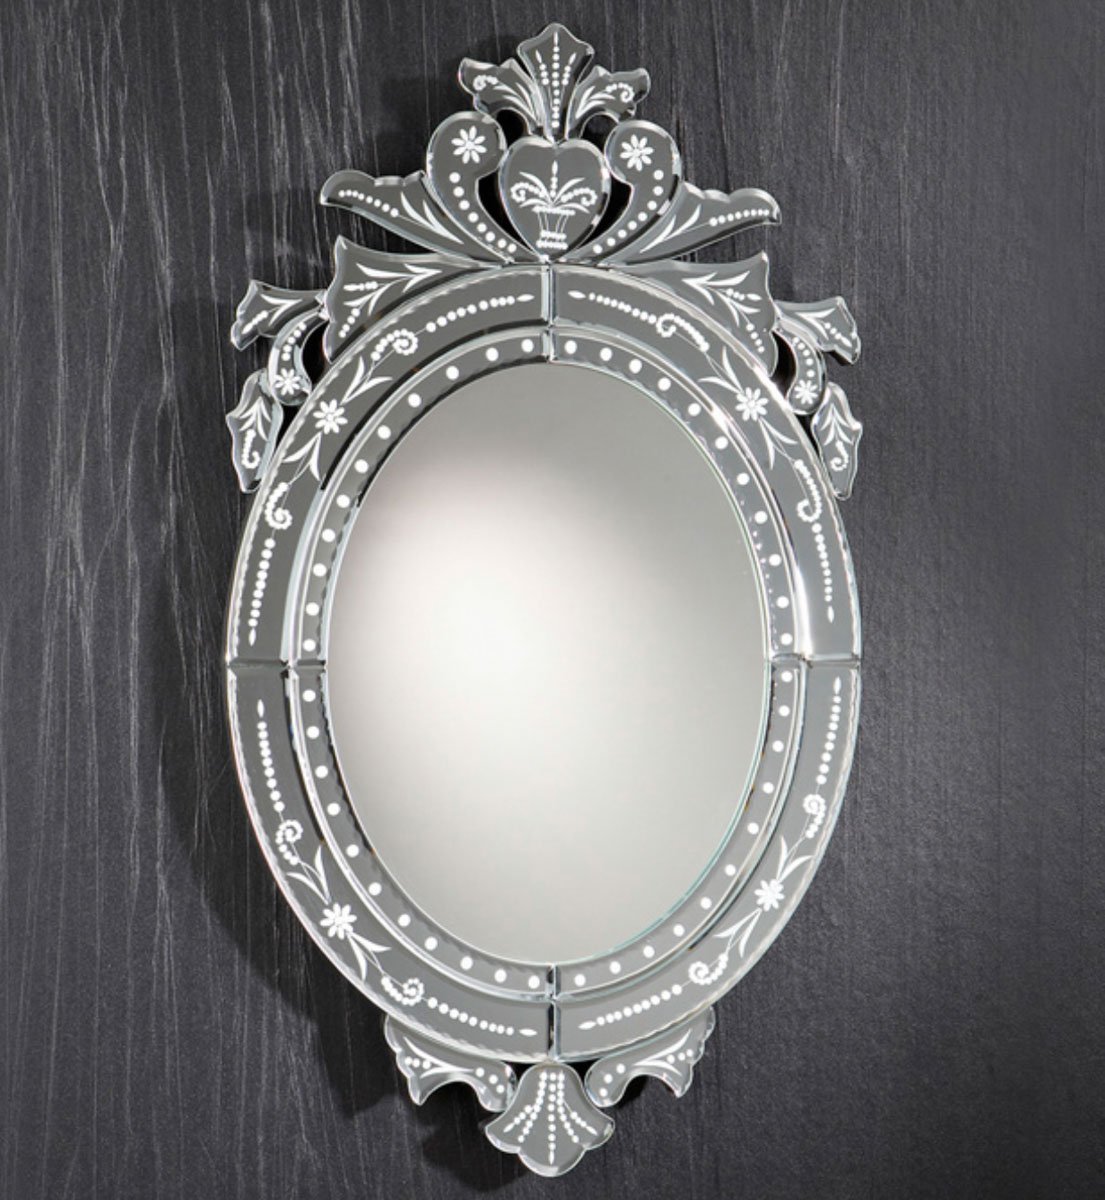 Oval Venetian Mirror: A Reflection Of Refined Elegance